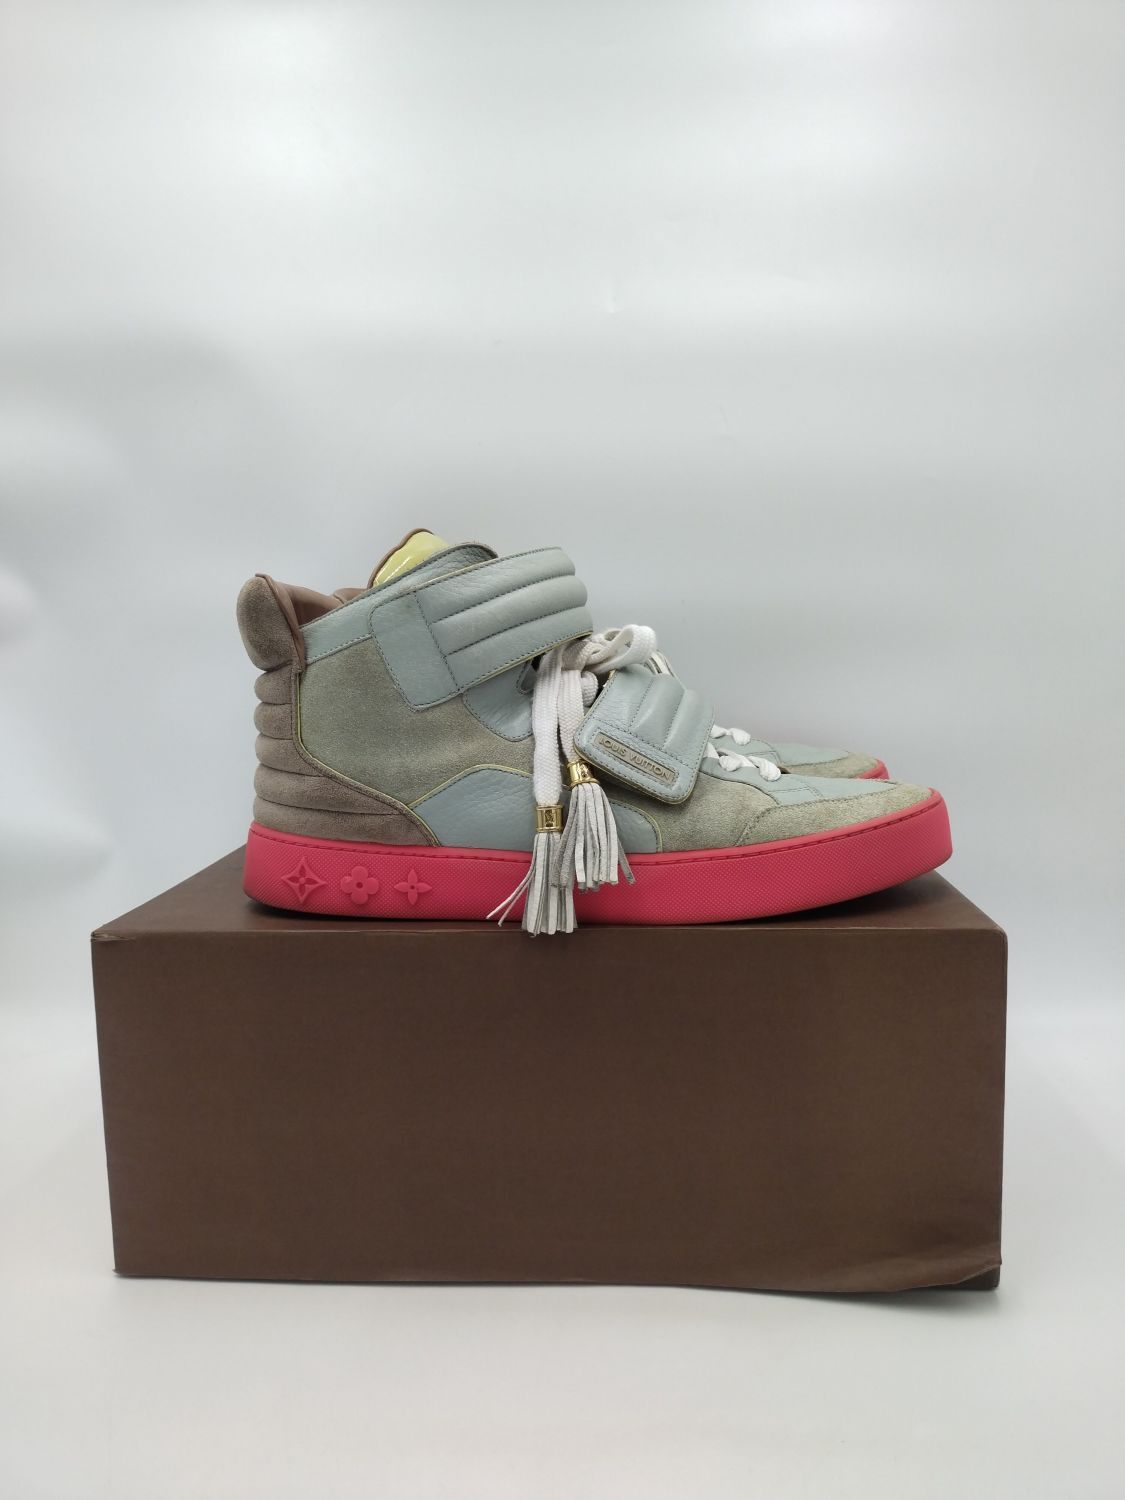 Louis Vuitton Jaspers Kanye Patchwork Zen Grey Pink Men's - YP6U6PMI - US